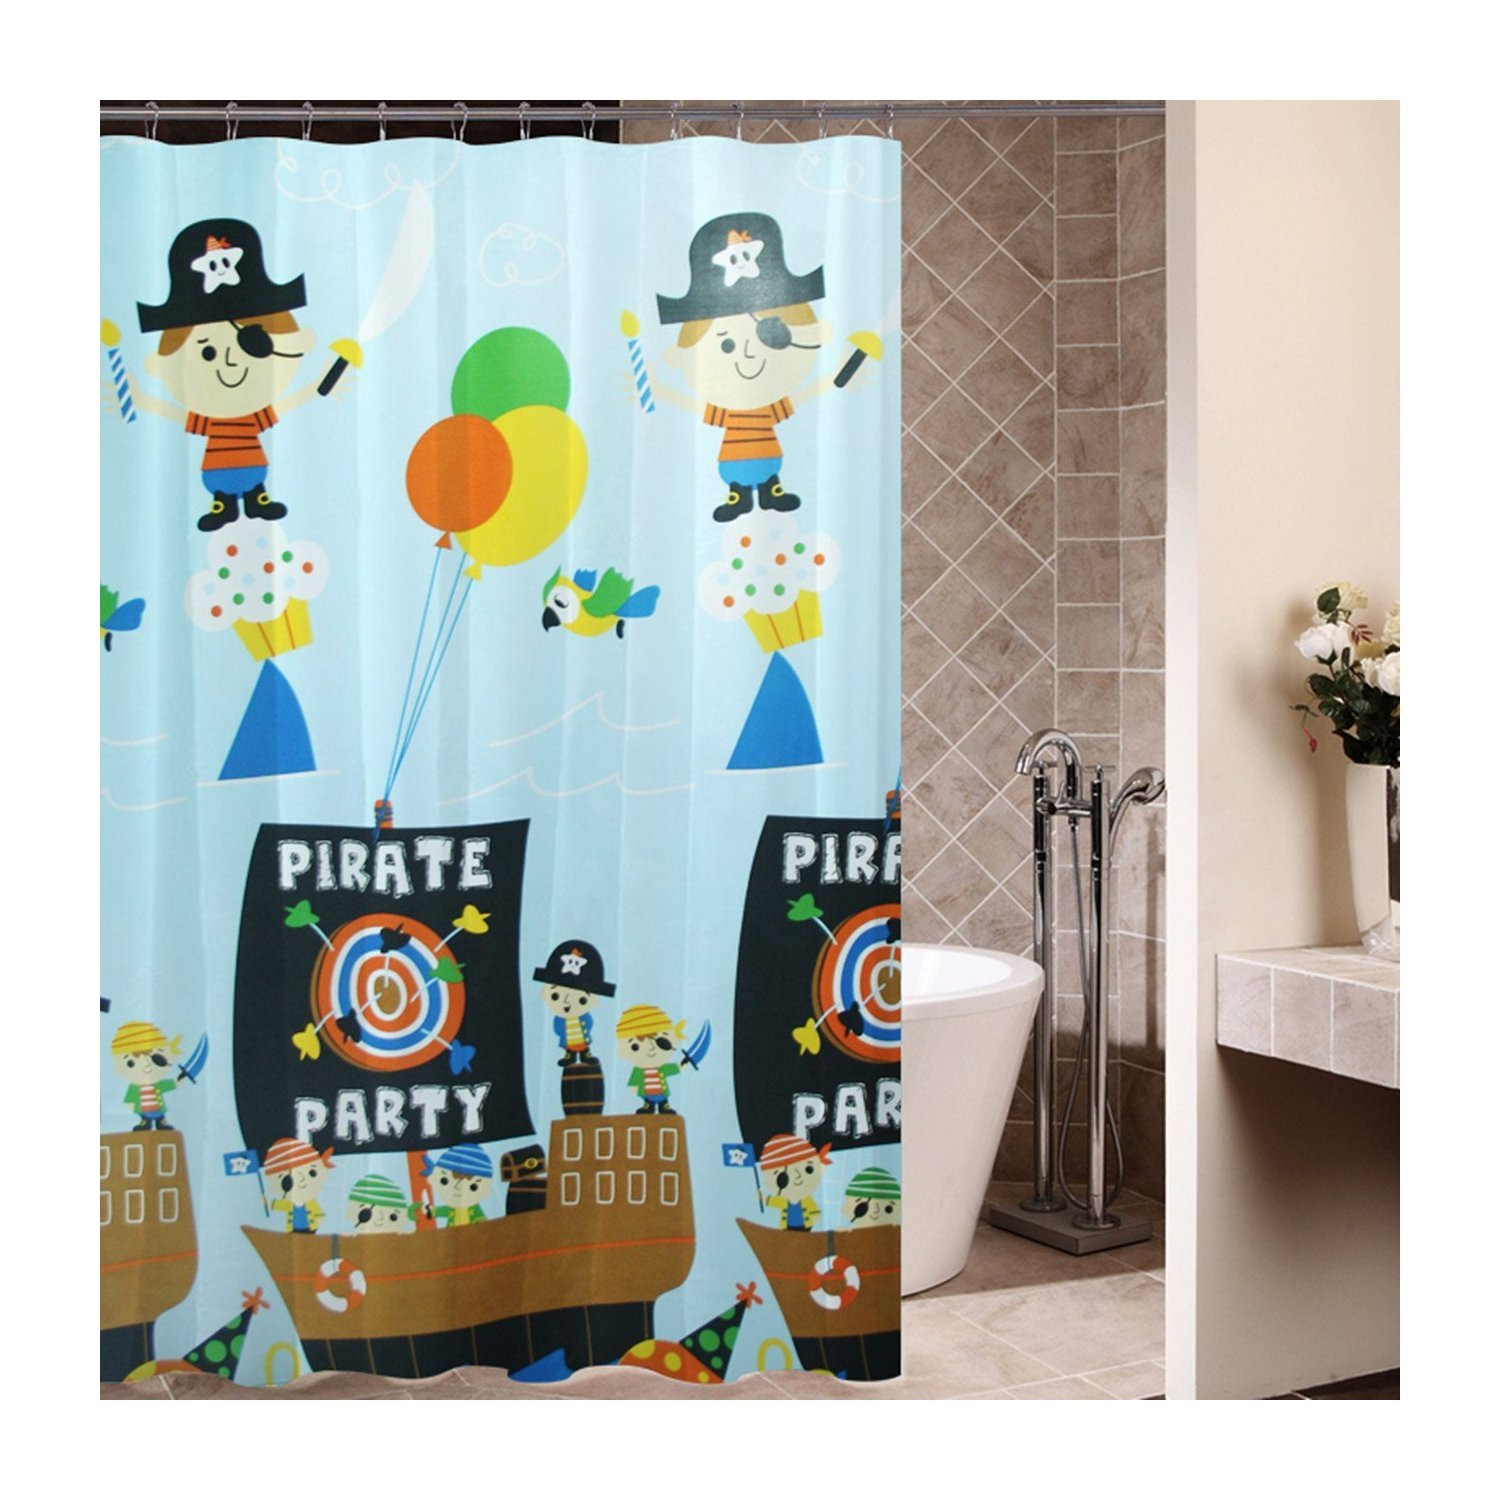 Pirate Bathroom Decor
 best top kids pirate shower curtain